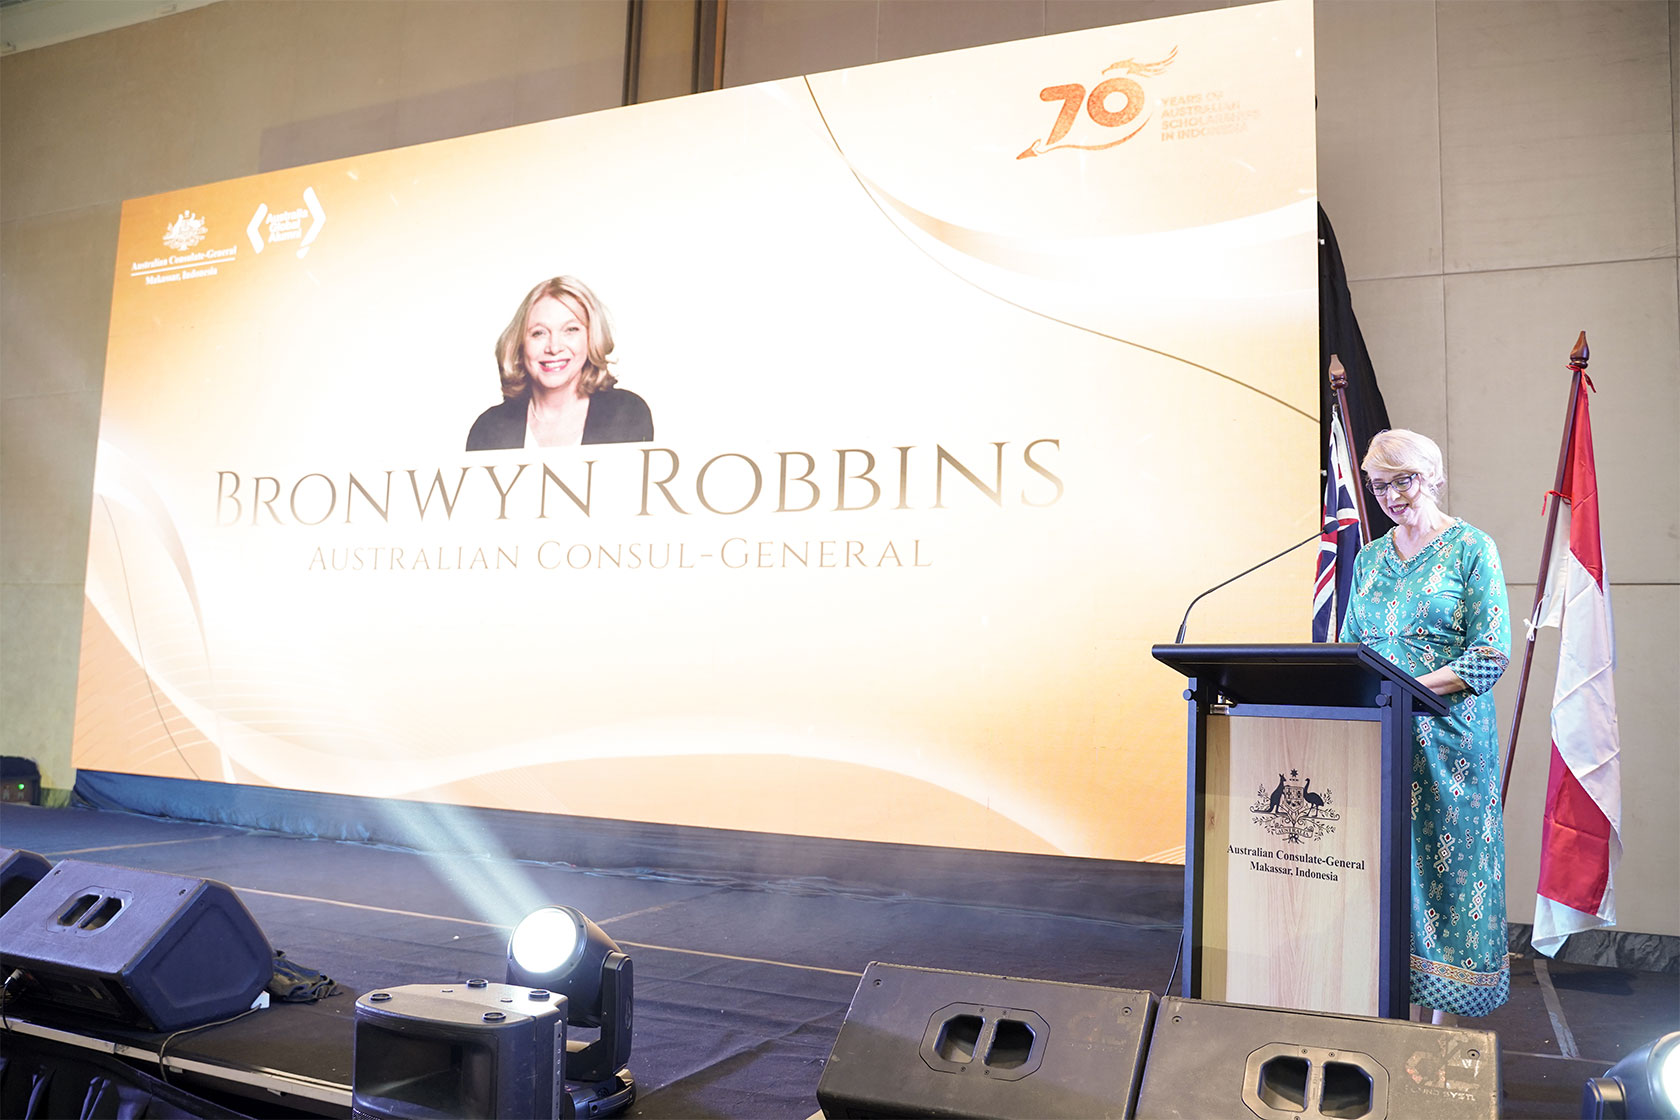 Australian Consul-General in Makassar Bronwyn Robbins delivers inspiring opening remarks.